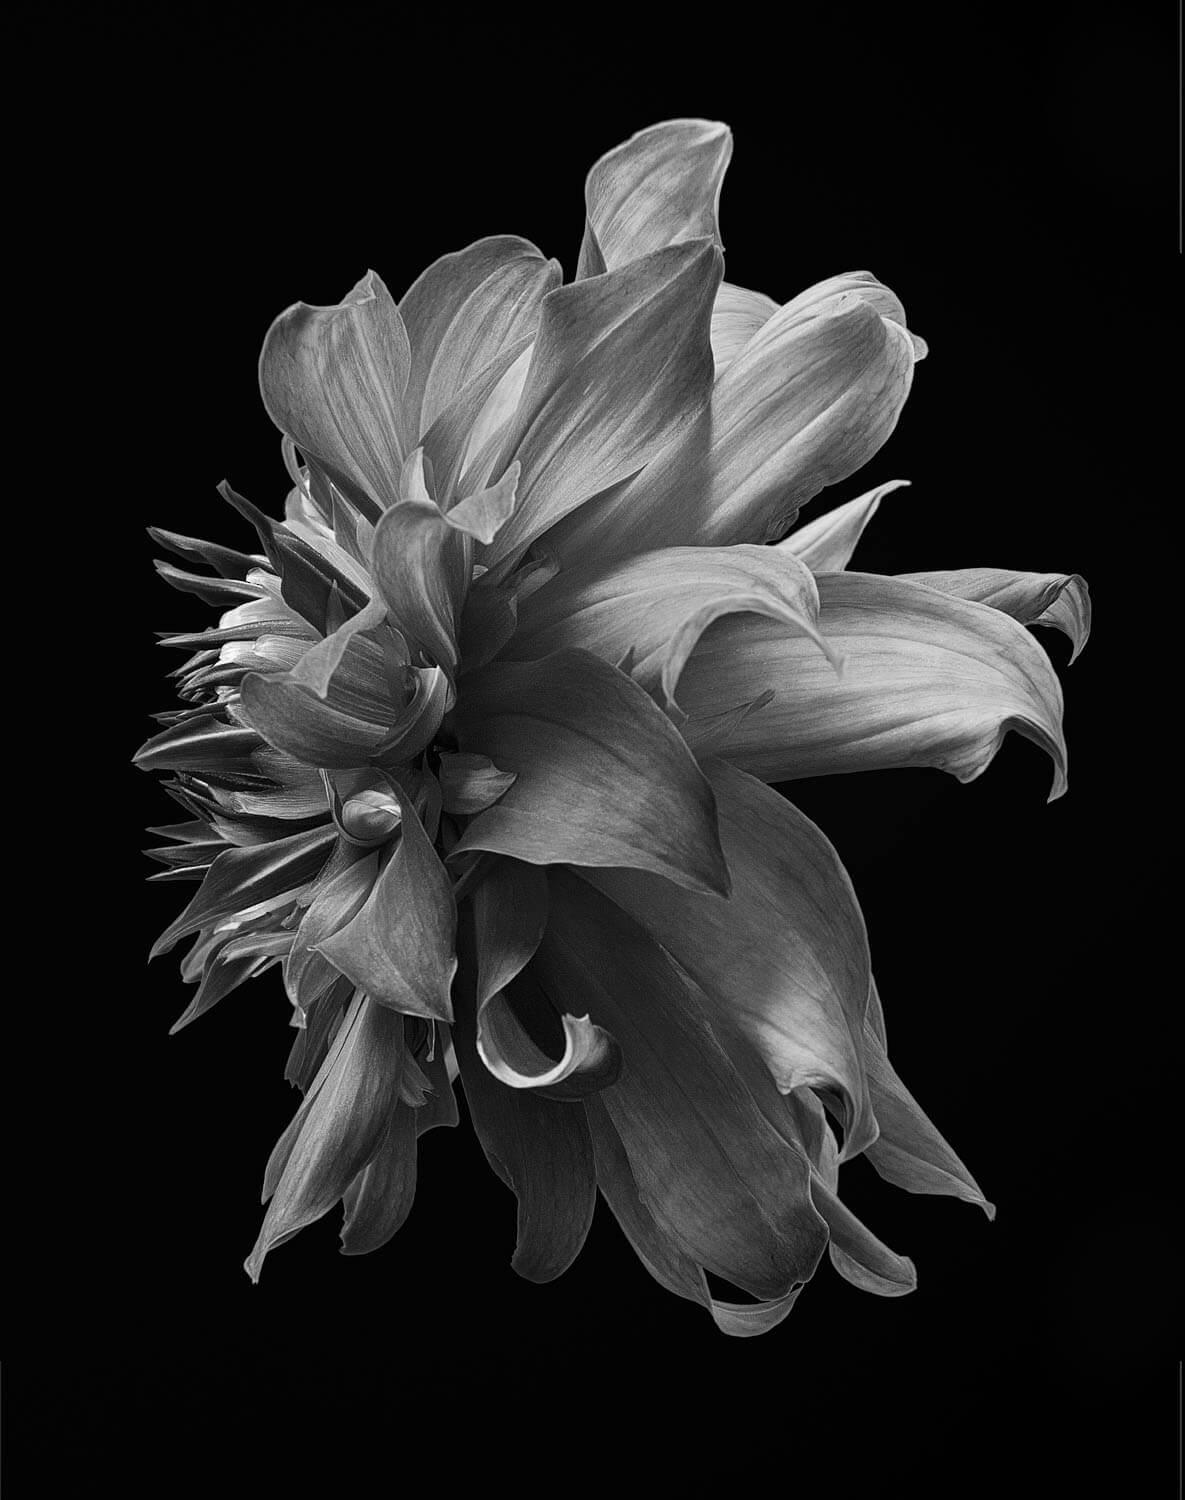 Black Dahlia #3 - Philip Gatward, Contemporary Photography, Flowers, Plants